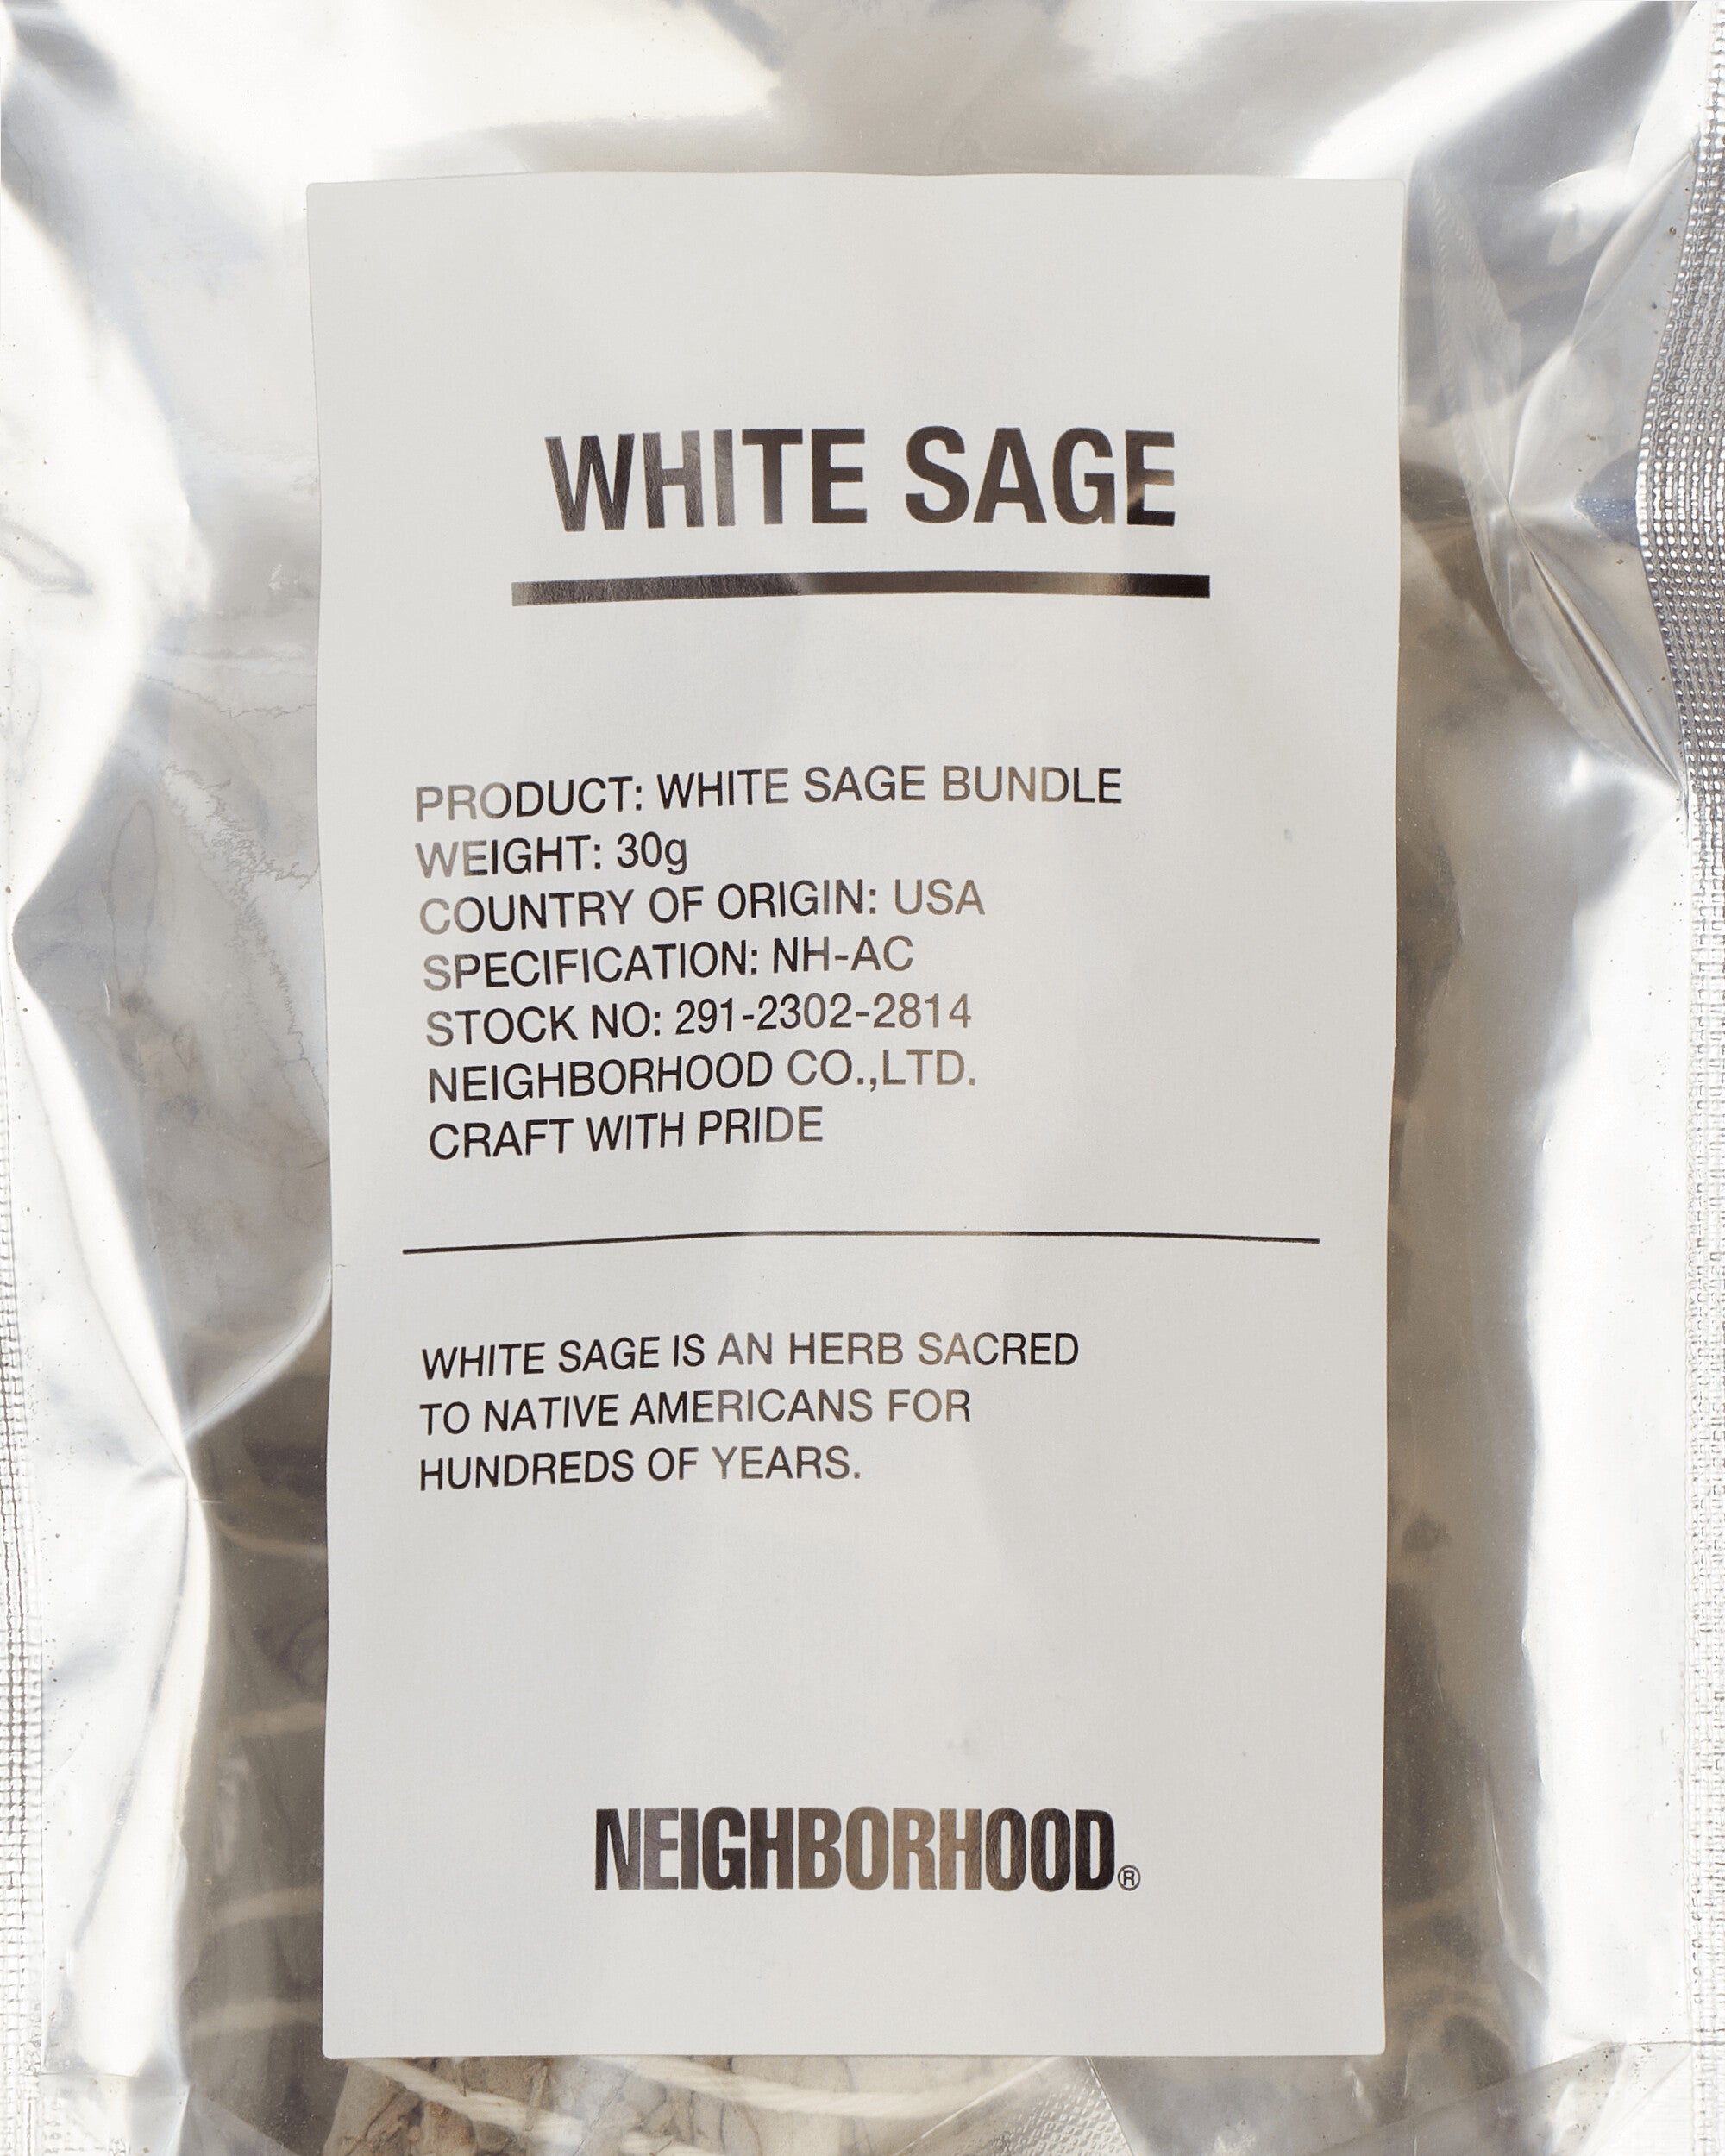 Neighborhood White Sage Multi Home Decor Incenses and Holders 241SLNH-AC02 MT